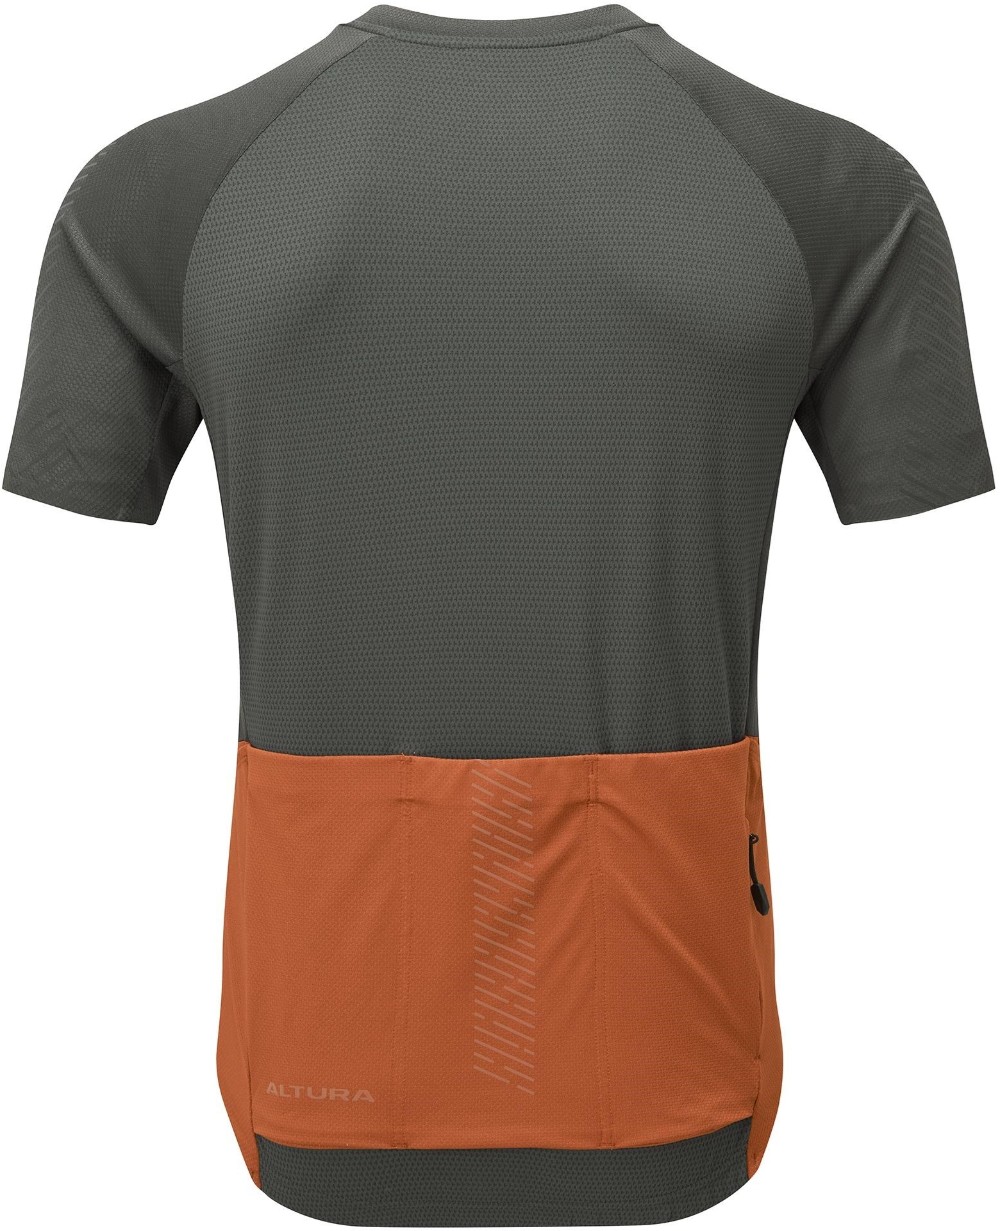 Endurance Short Sleeve Jersey image 1